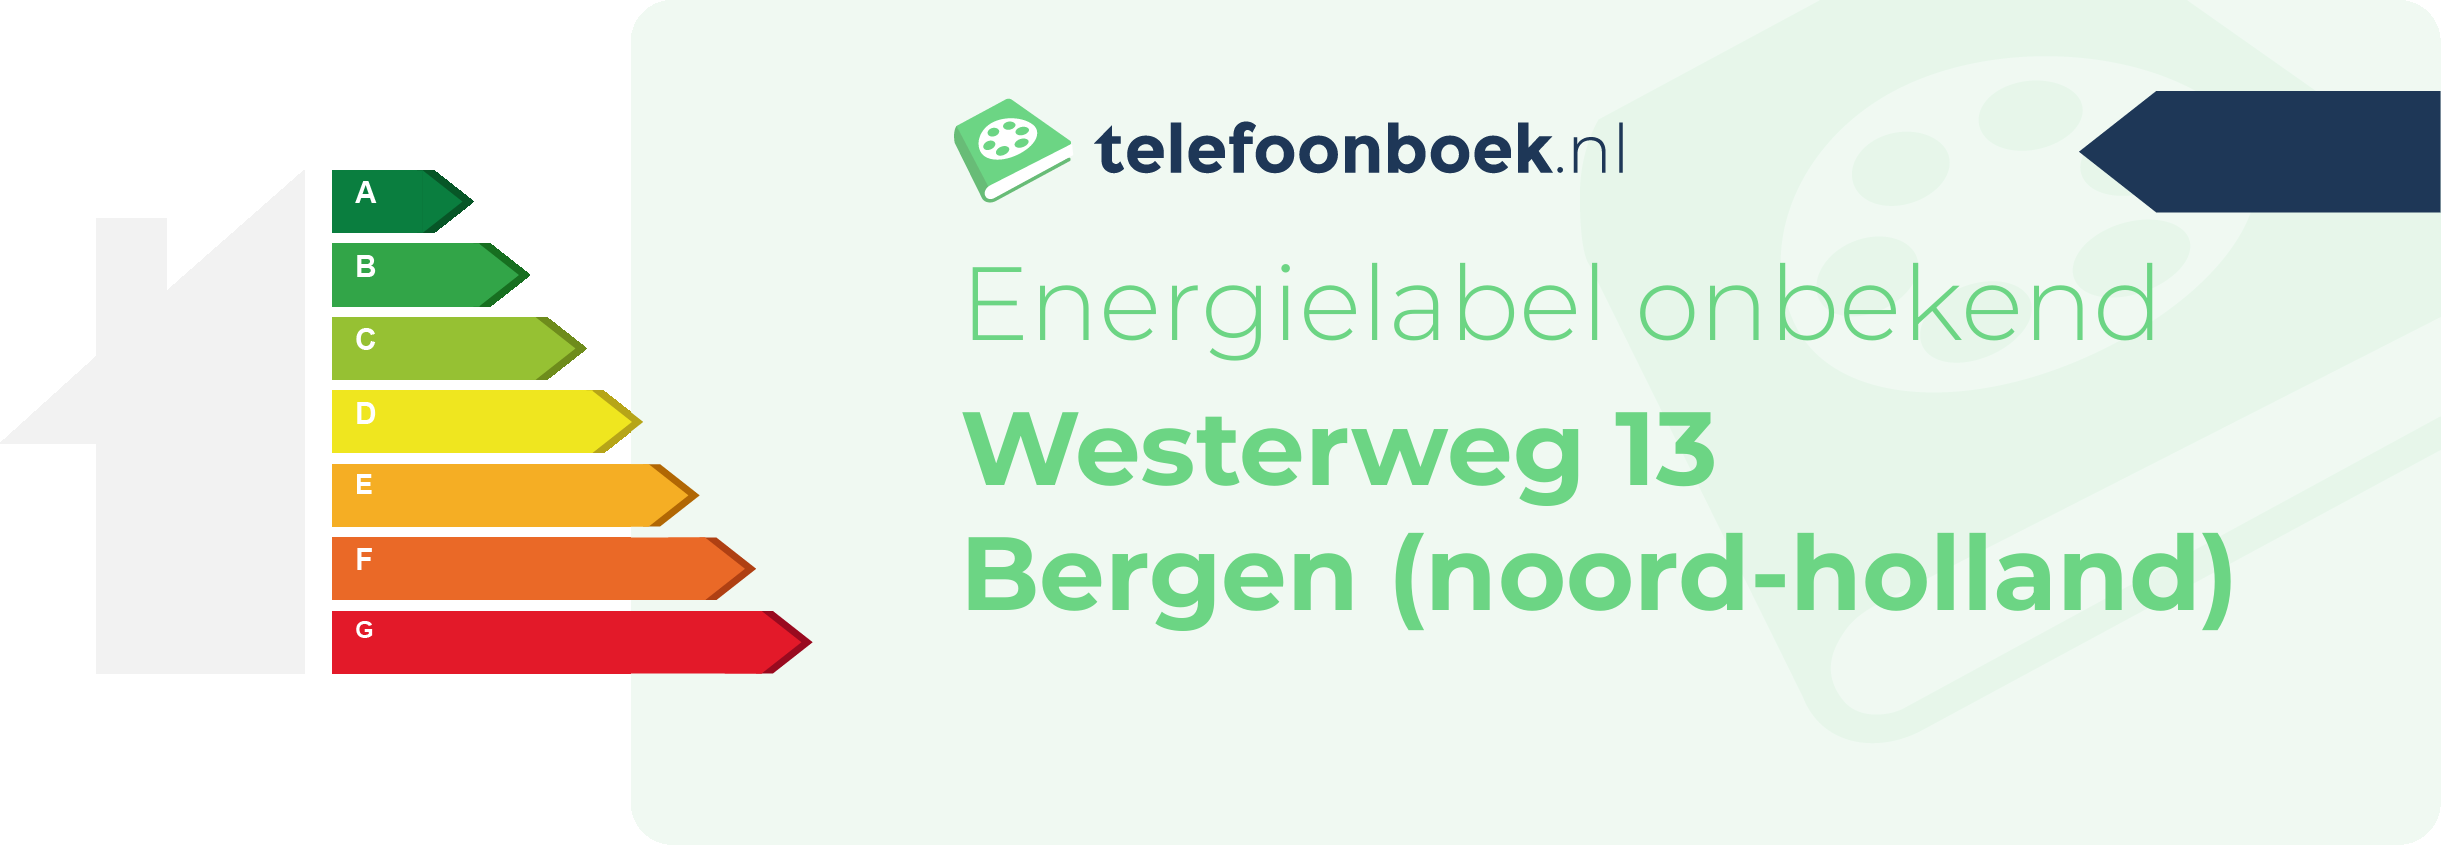 Energielabel Westerweg 13 Bergen (Noord-Holland)